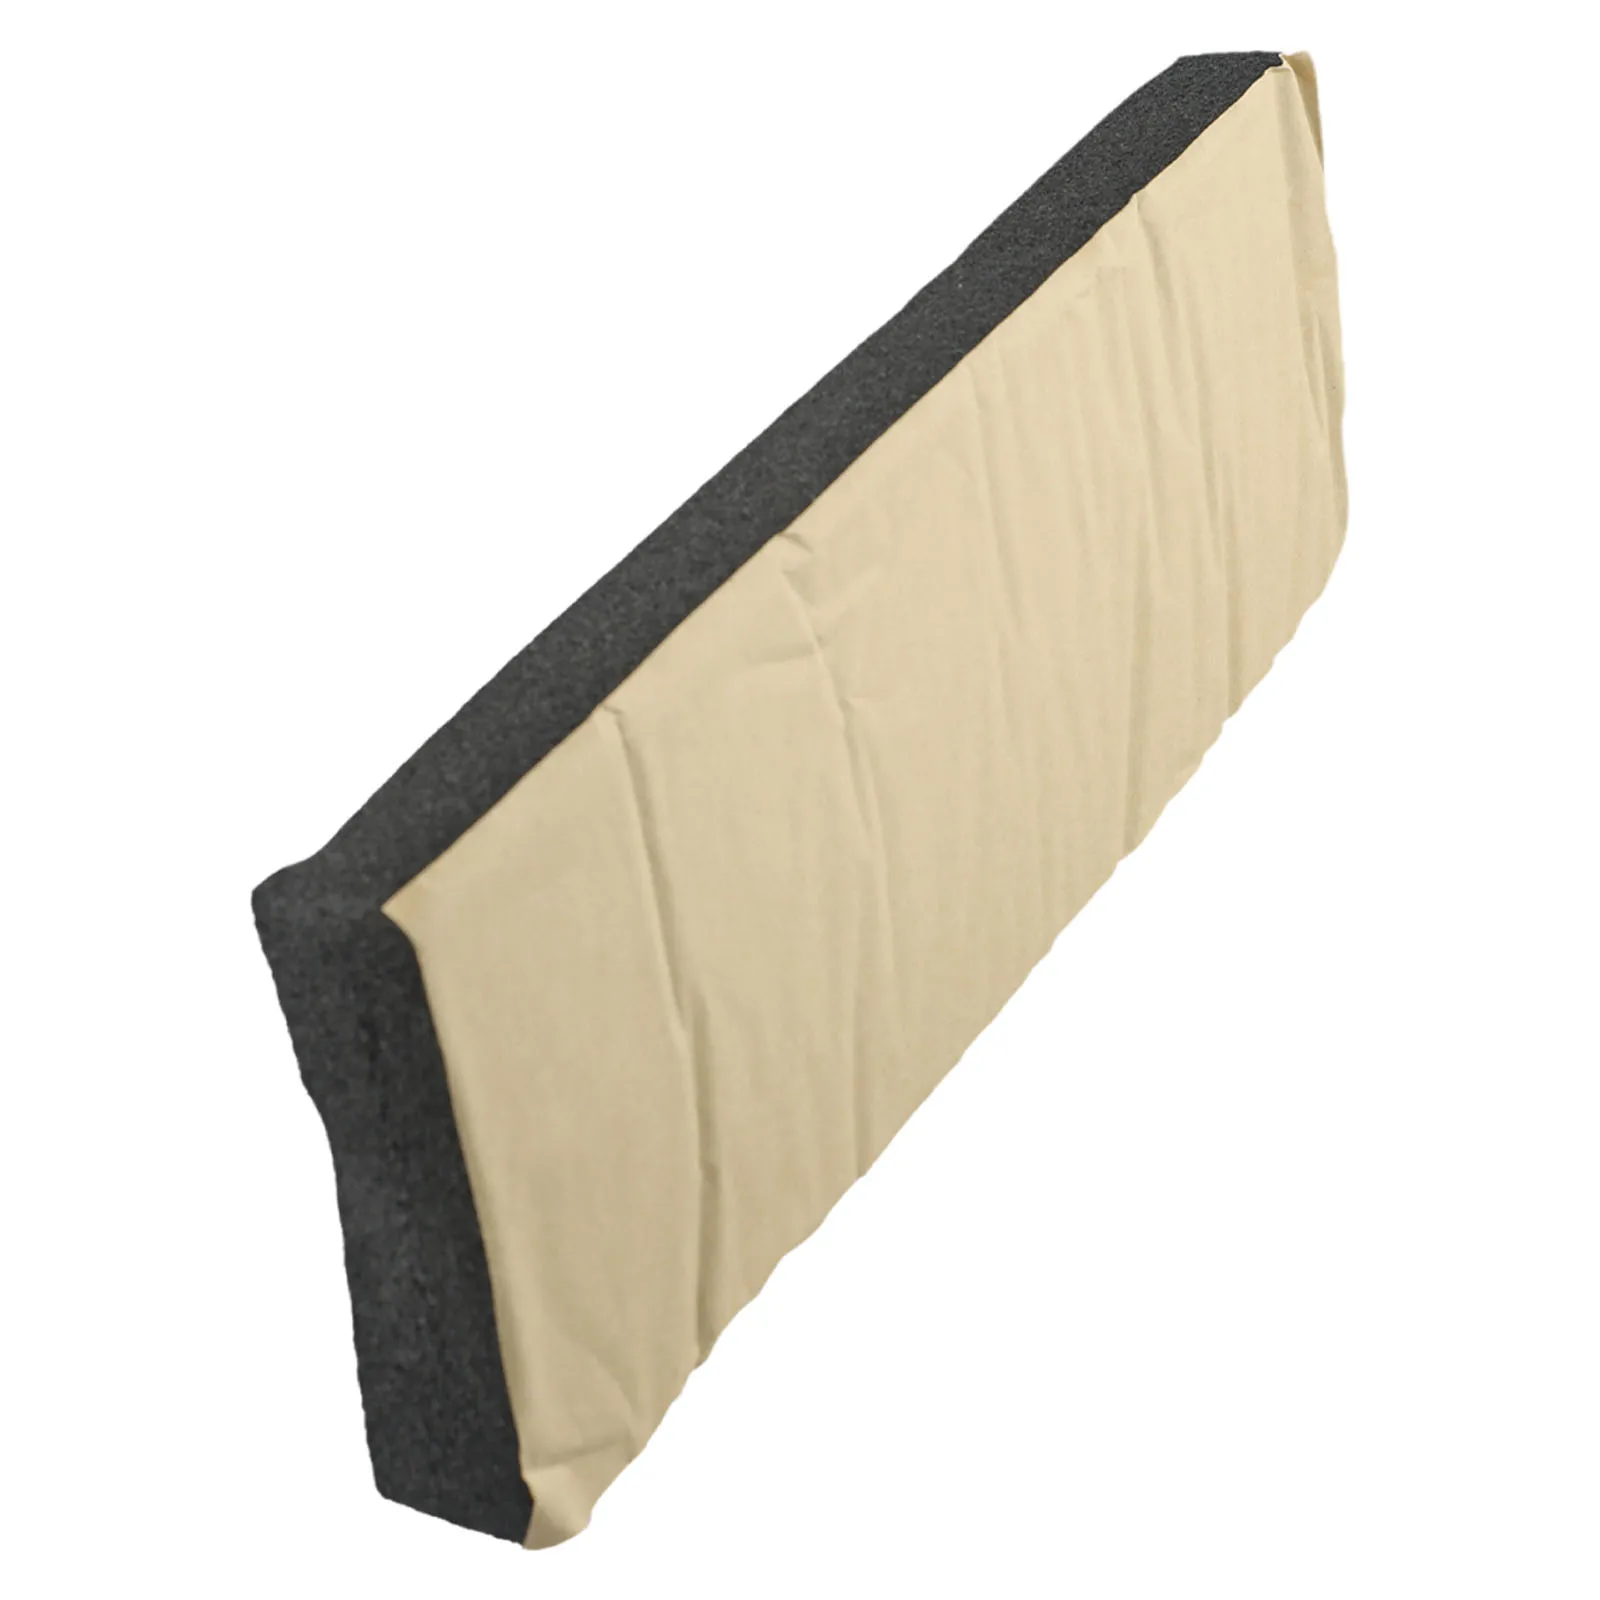 

4pcs Car Door Protector Garage Wall Anticollision Strip 30*10*3cm Black Rubber Plastic Foam Block Wear-resistant Heatproof Parts